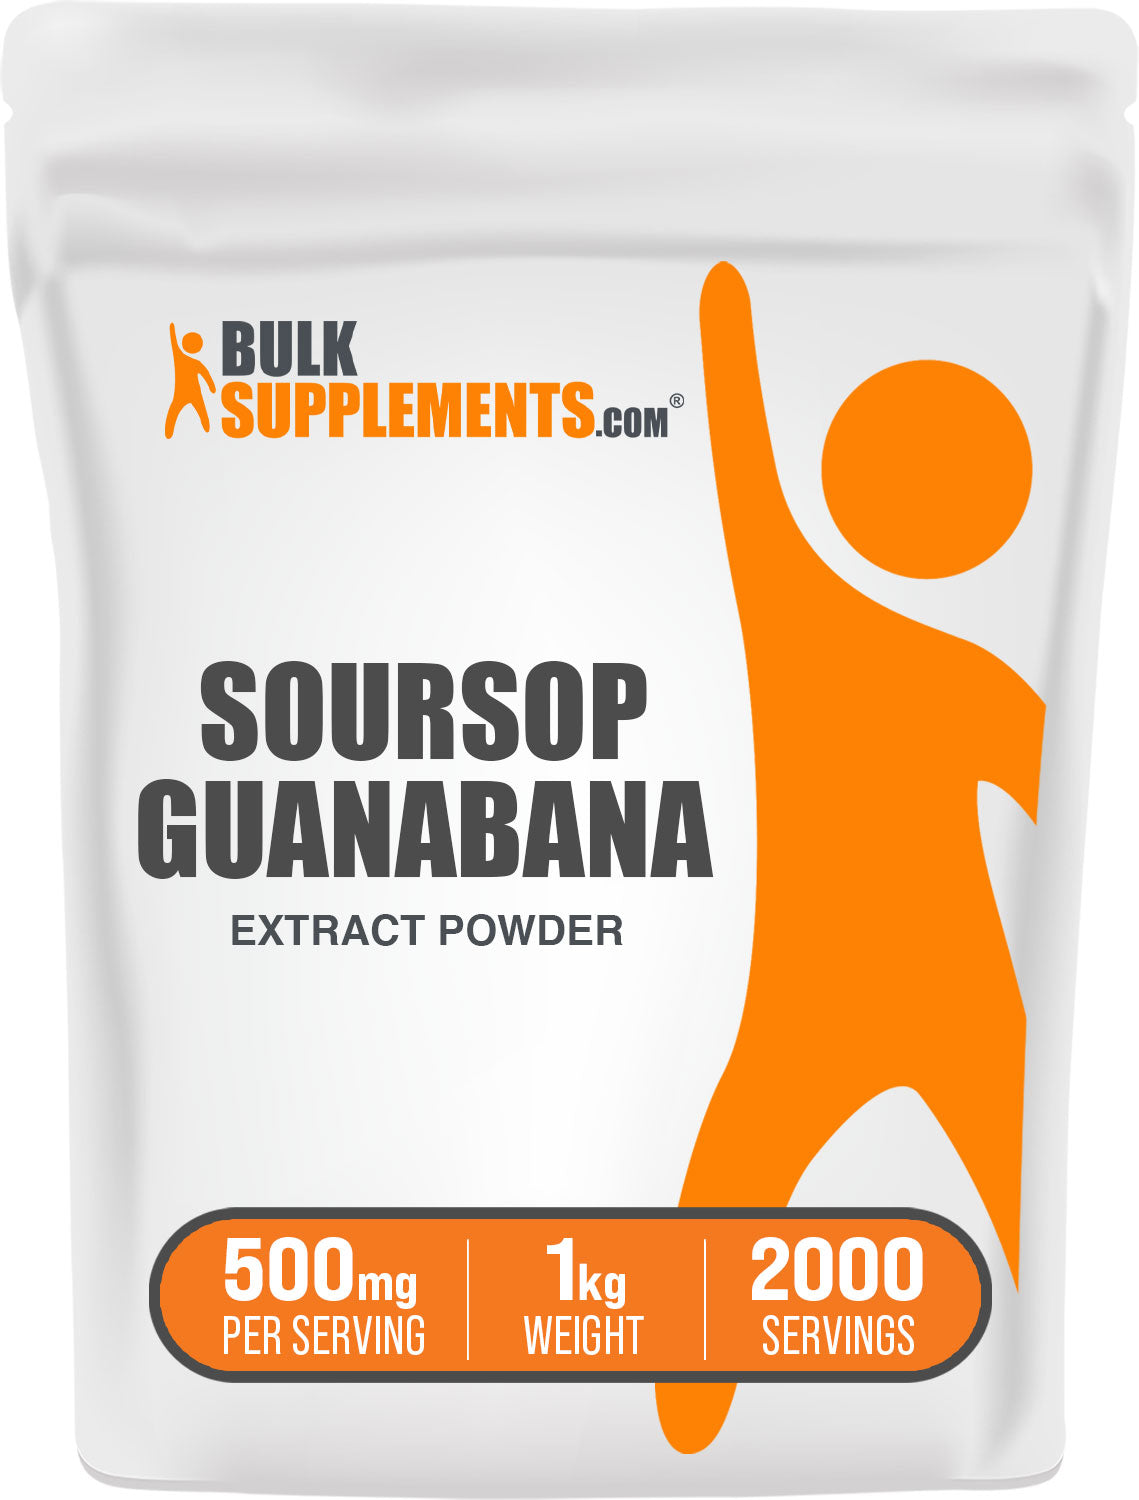 Soursop Guanabana Extract 1kg Bag